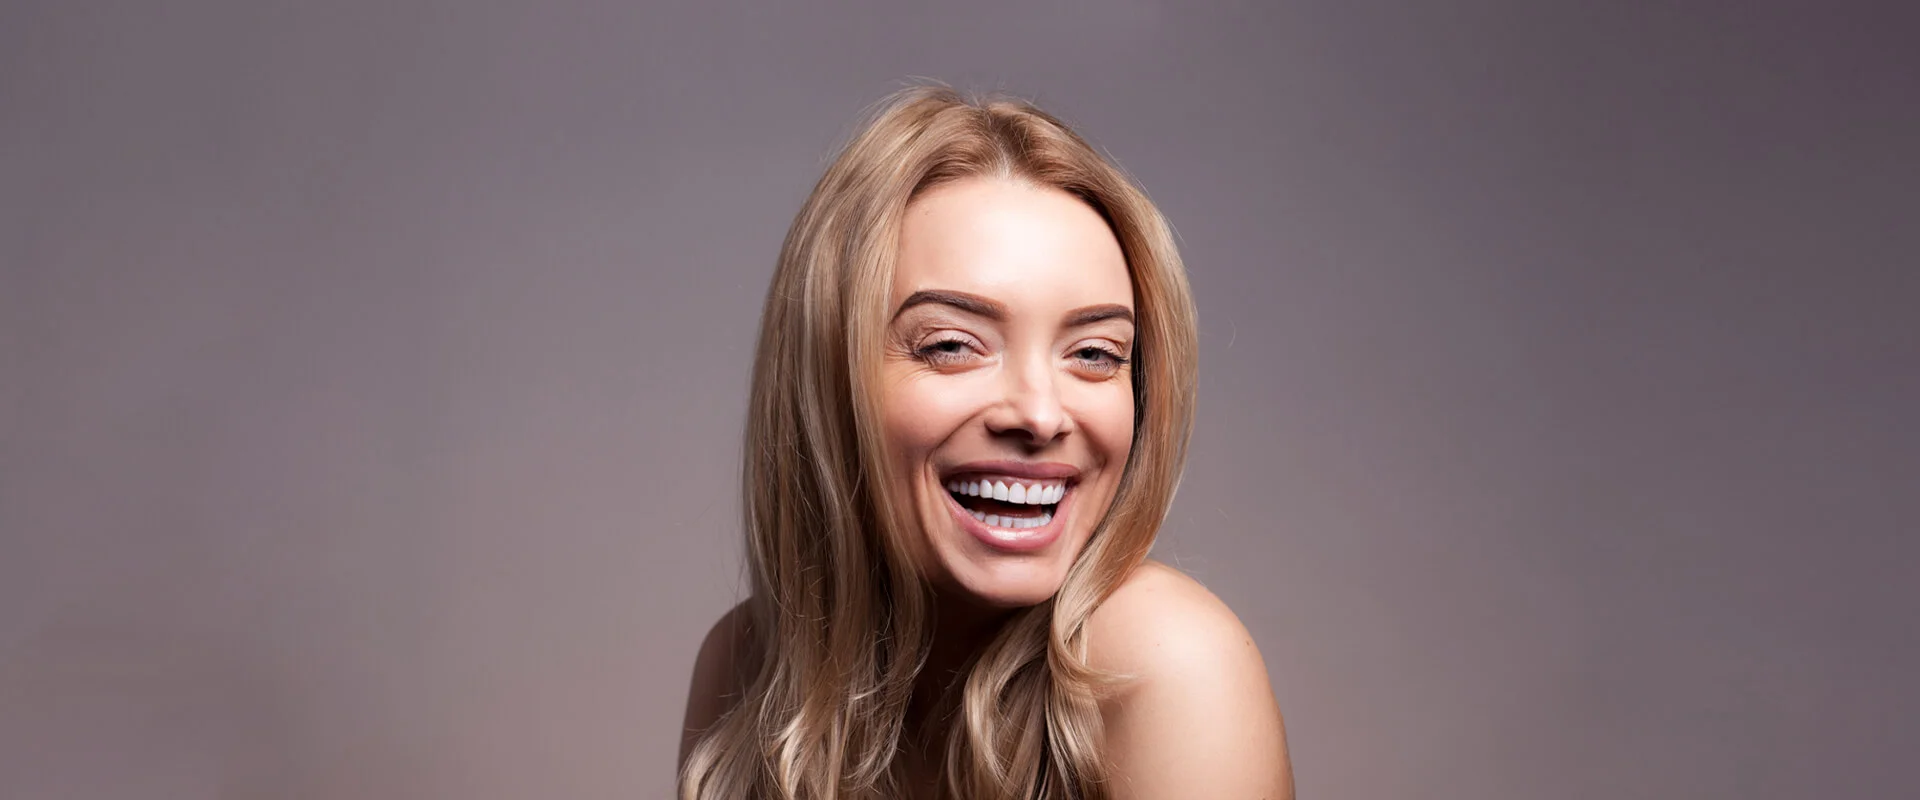 smiling women showing her teeth